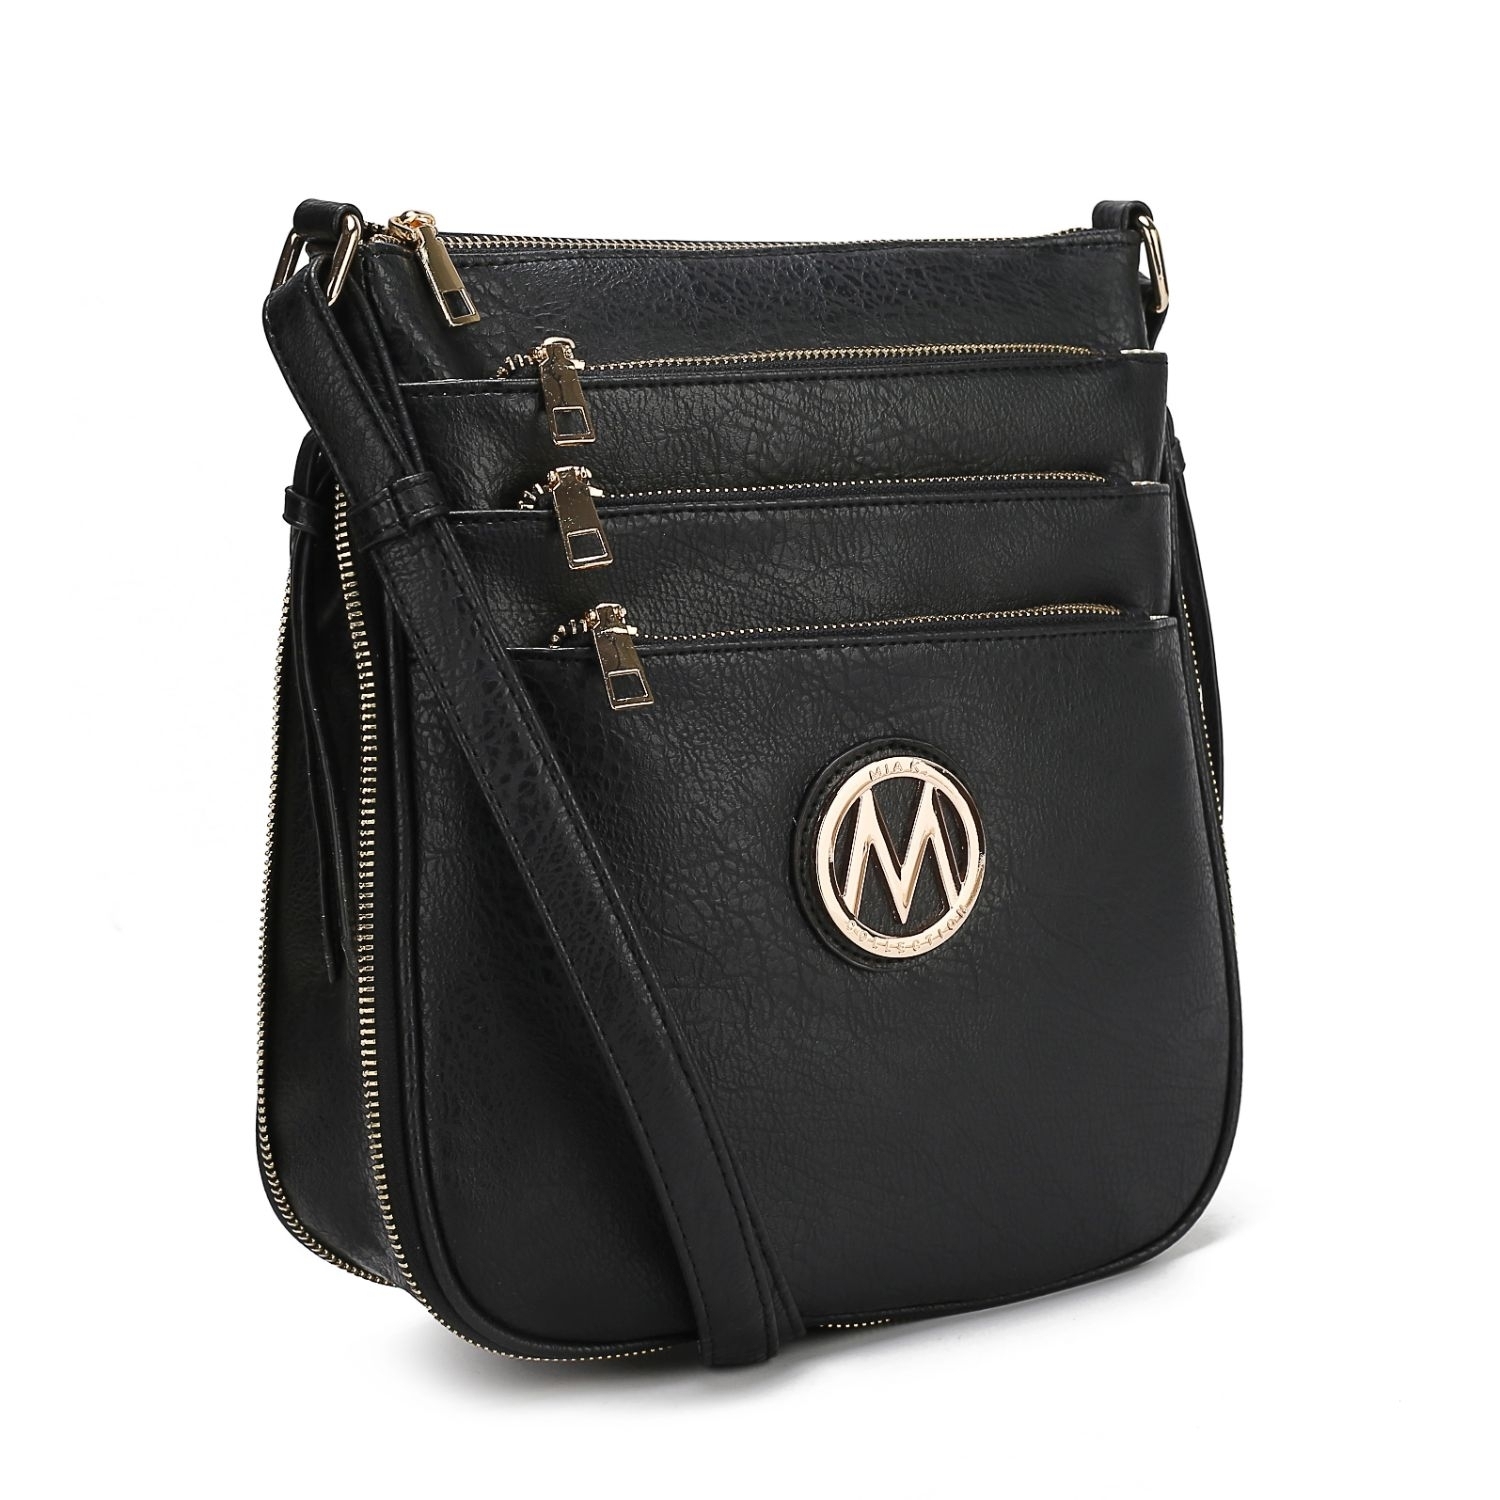 MKF Collection Salome Expandable Crossbody Handbag By Mia K. - Seafoam